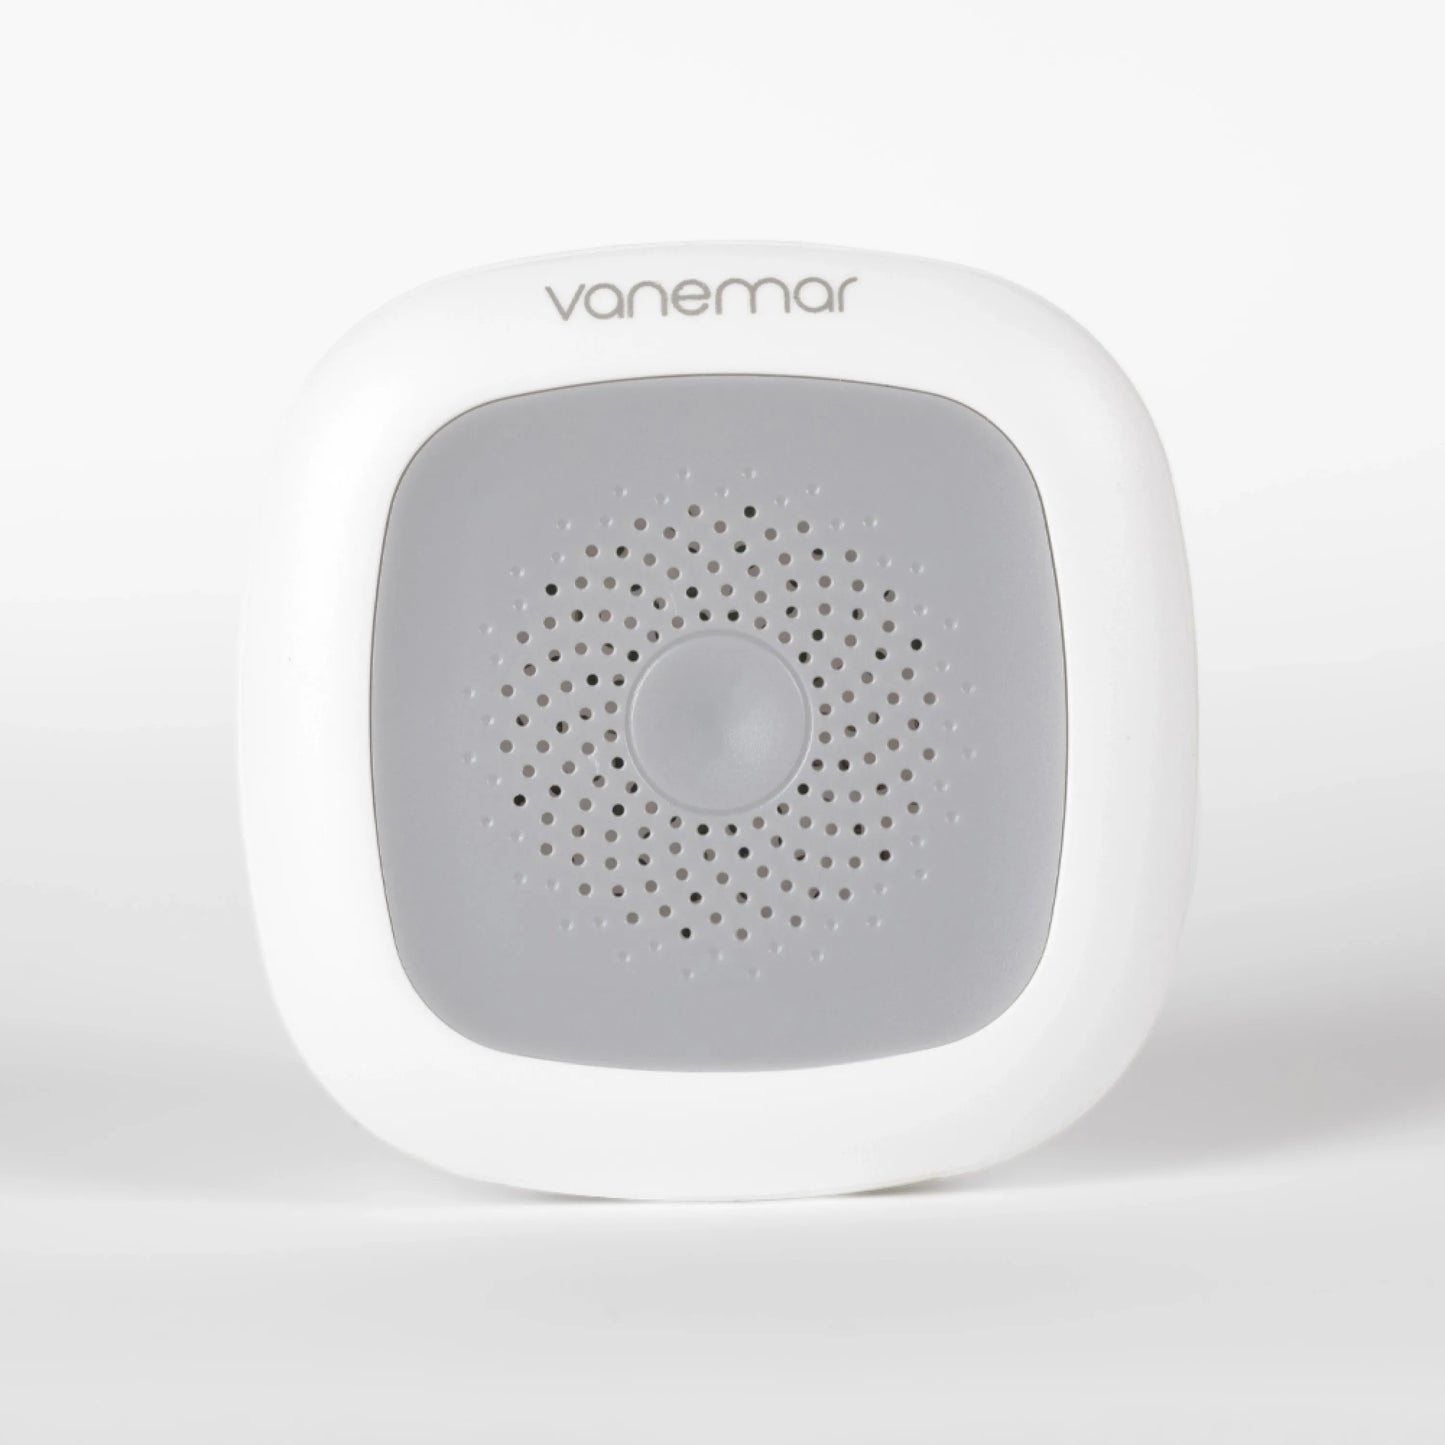 vanemar temperature and humidity sensor front image